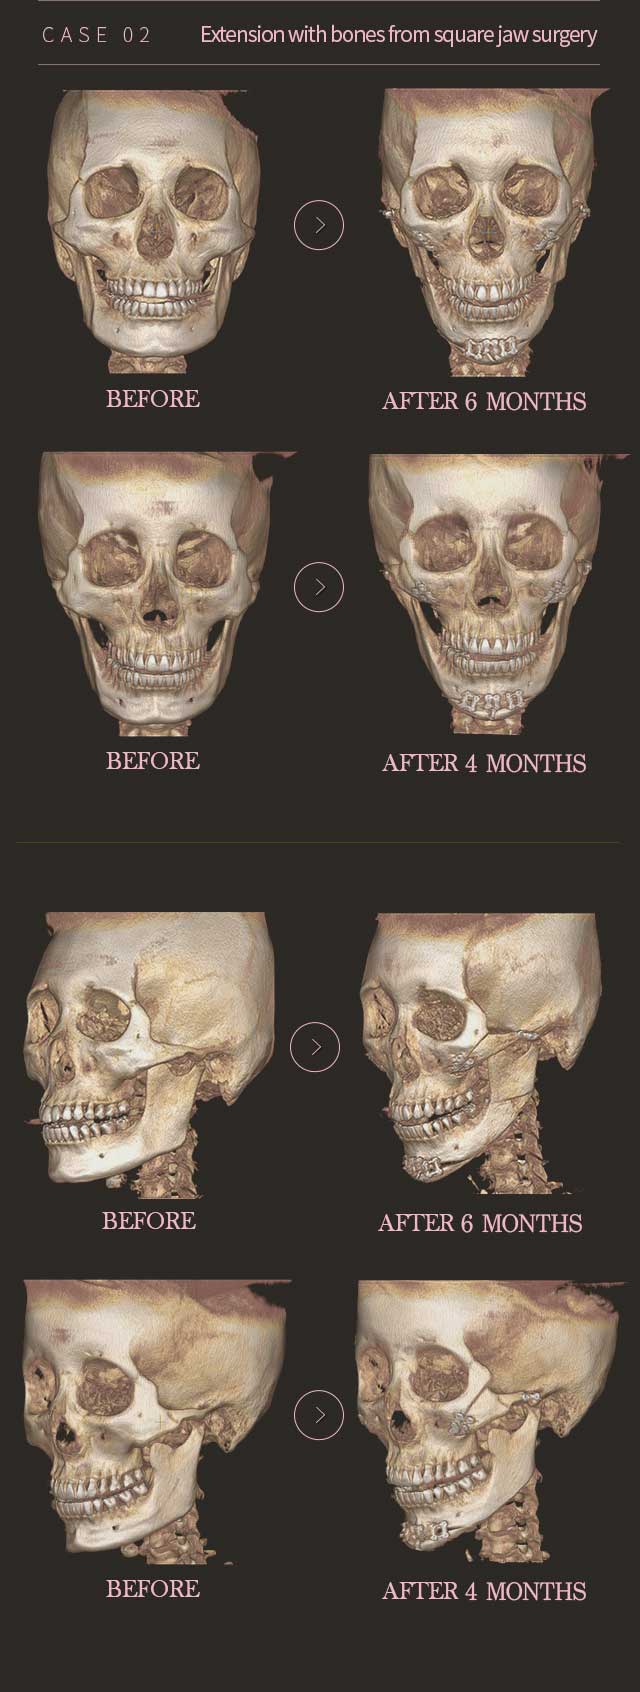 Genioplasty Chin Length Extension/Reduction Surgery